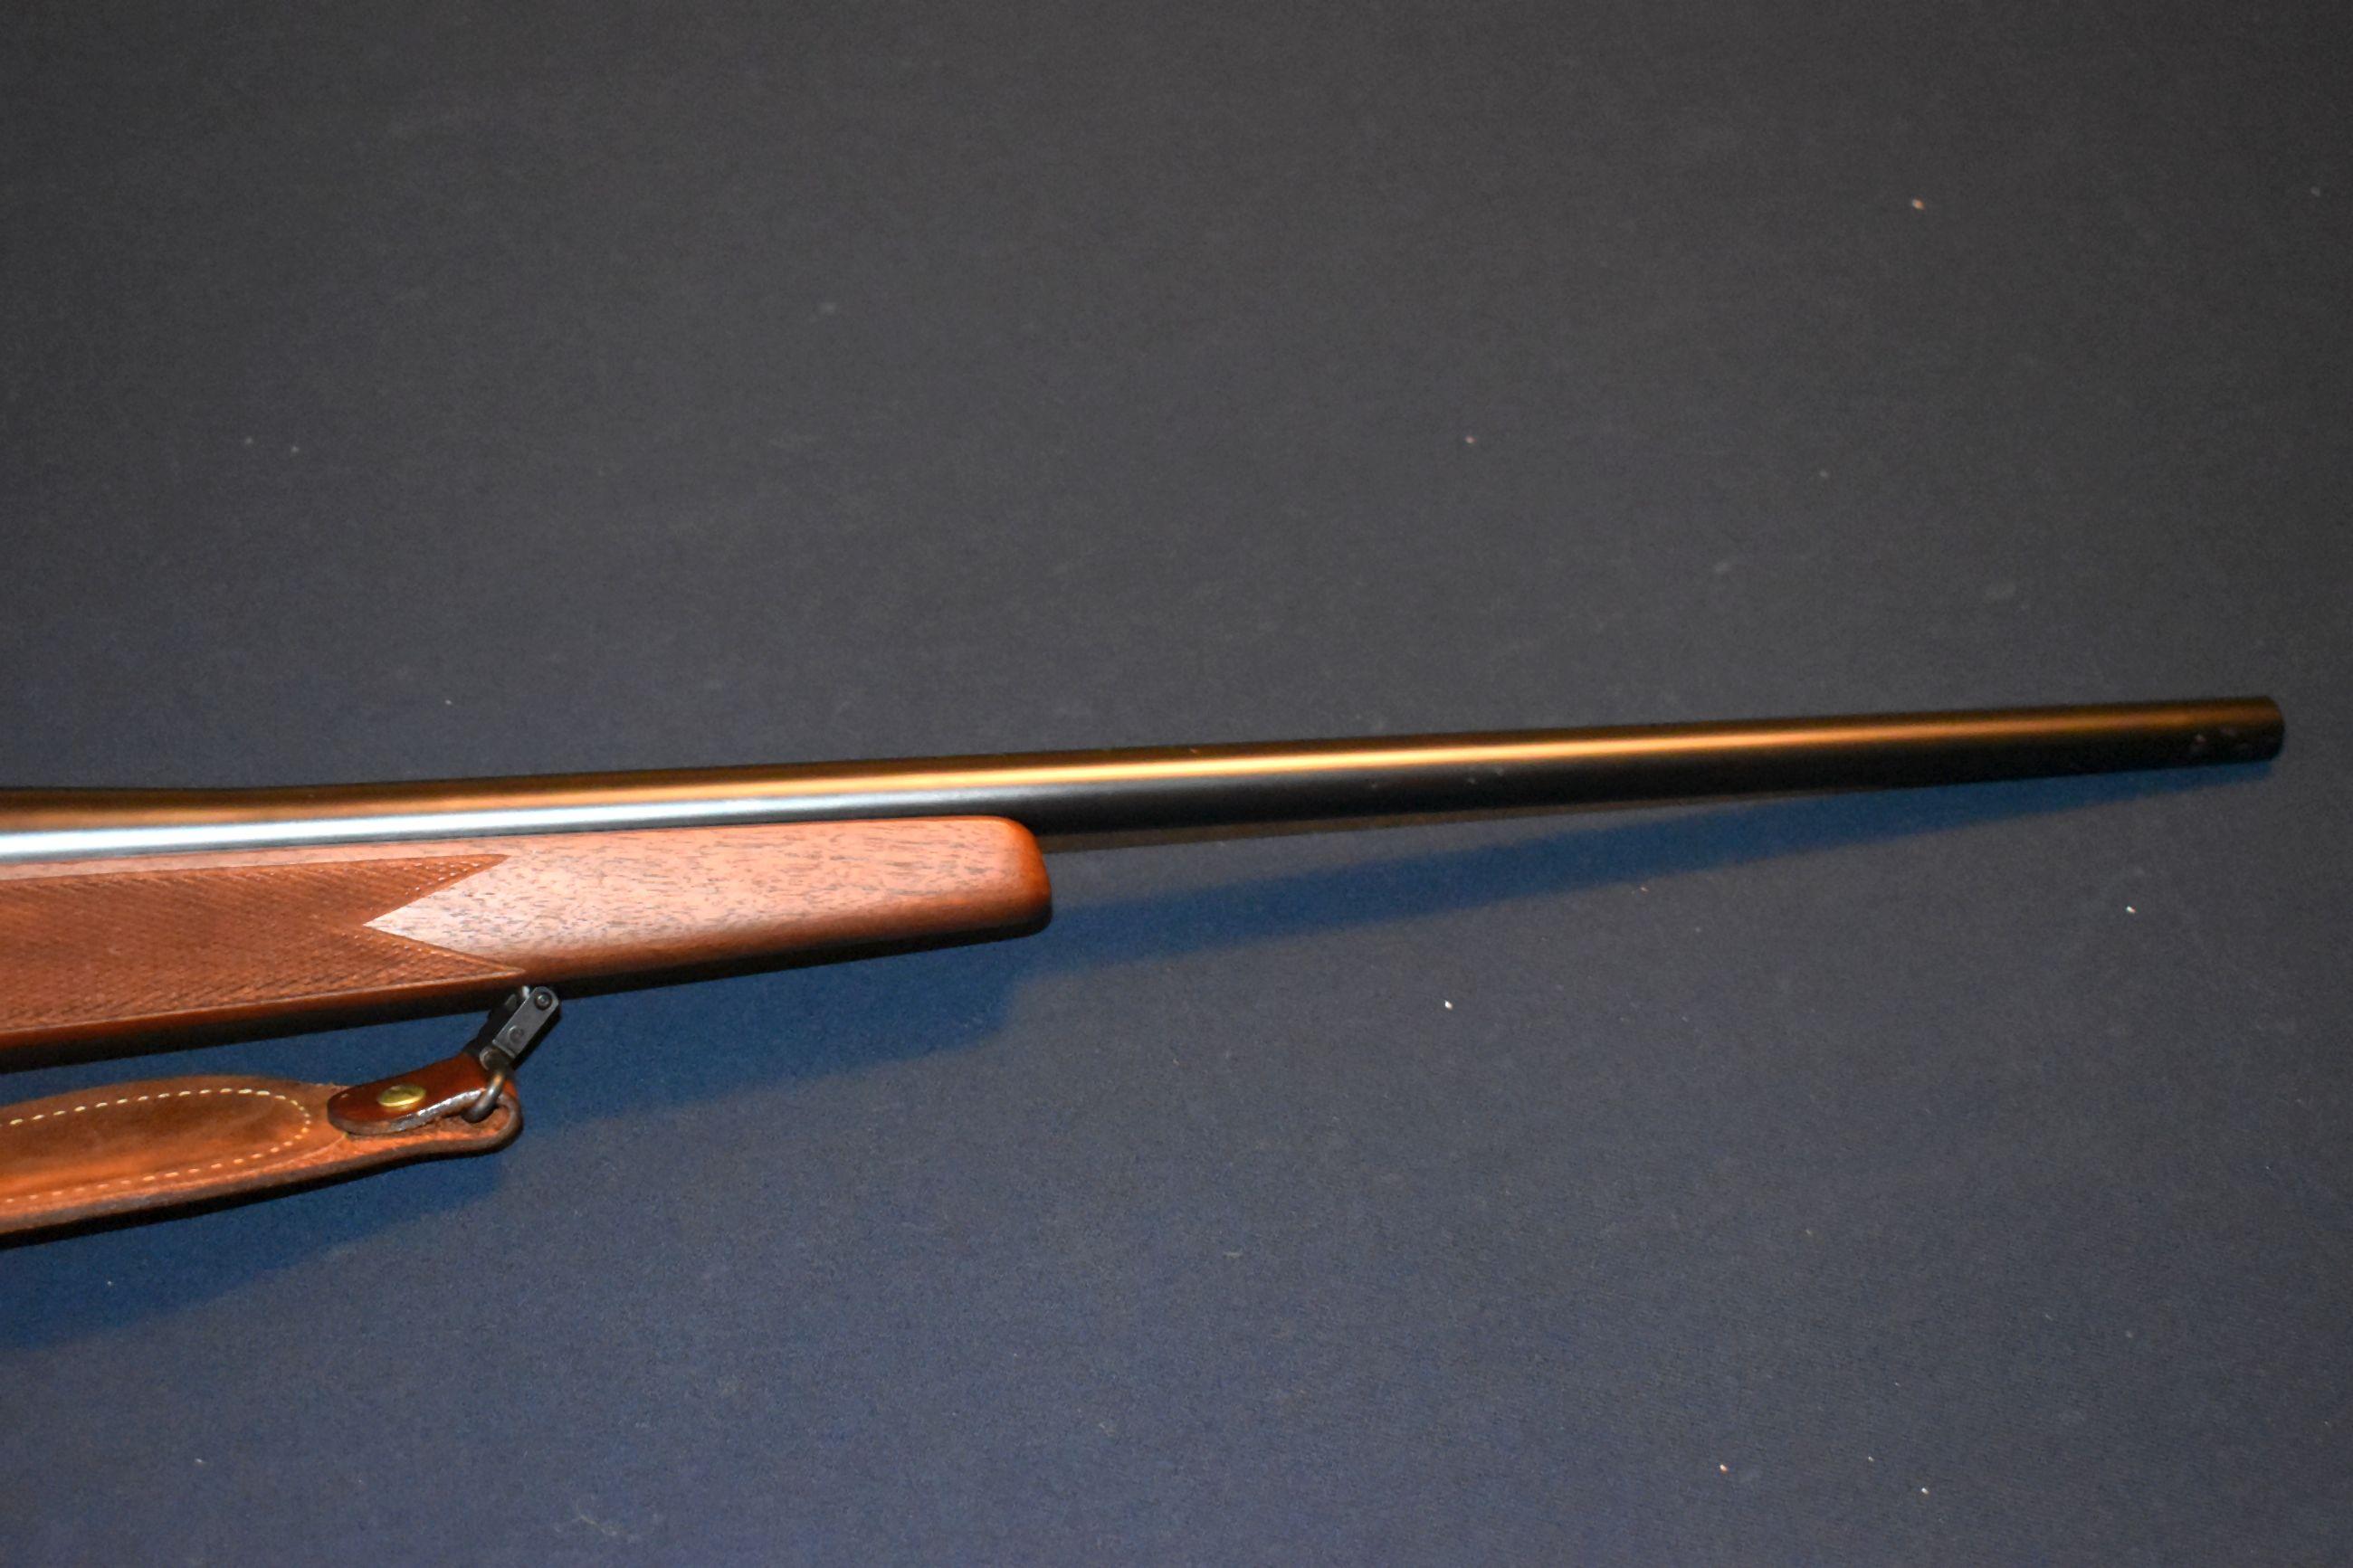 Weatherby Vangaurd VGS Bolt Action Rifle, 7MM Rem. Mag., Leupold Vari-X 2.5x8 Scope, Wood Stock, Sli